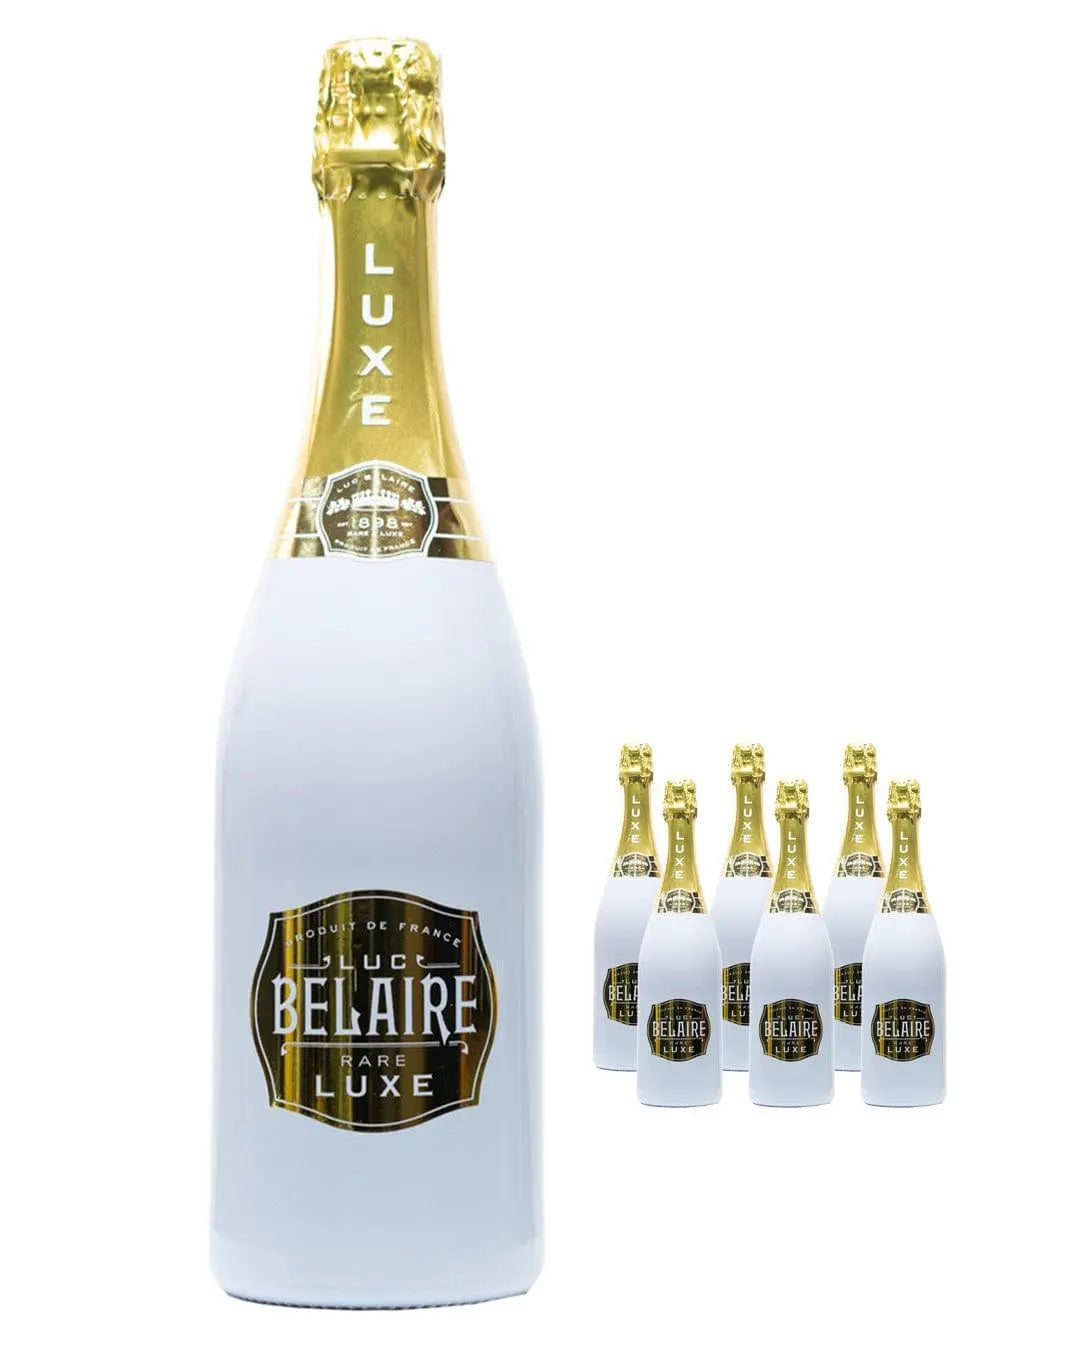 Luc Belaire Luxe Wine Case, 6 x 75 cl Wine Cases